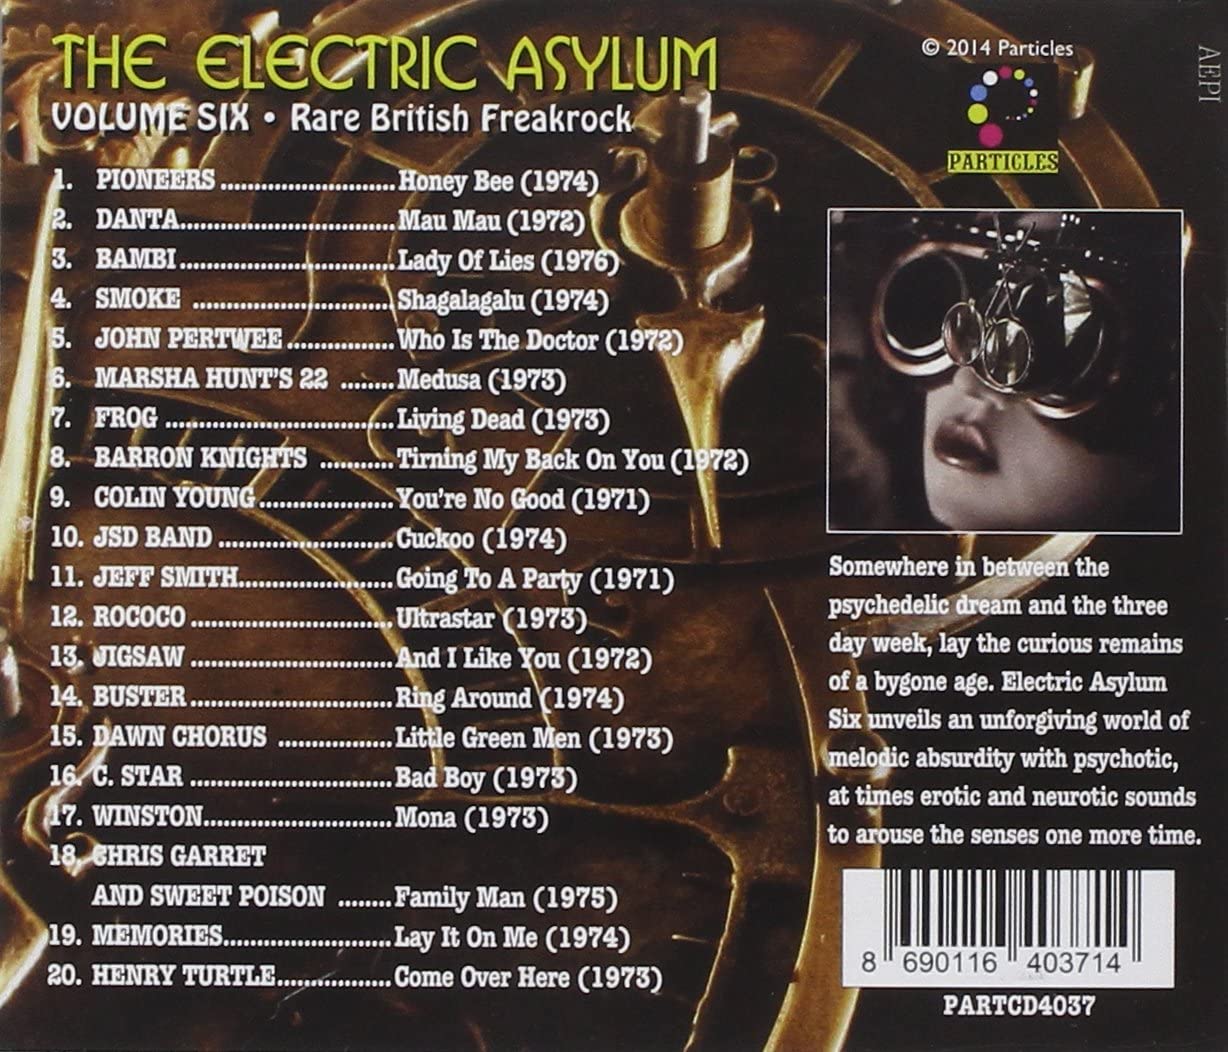 Electric Asylum Vol.6: Rare British Freakrock 1971-1976 - CD